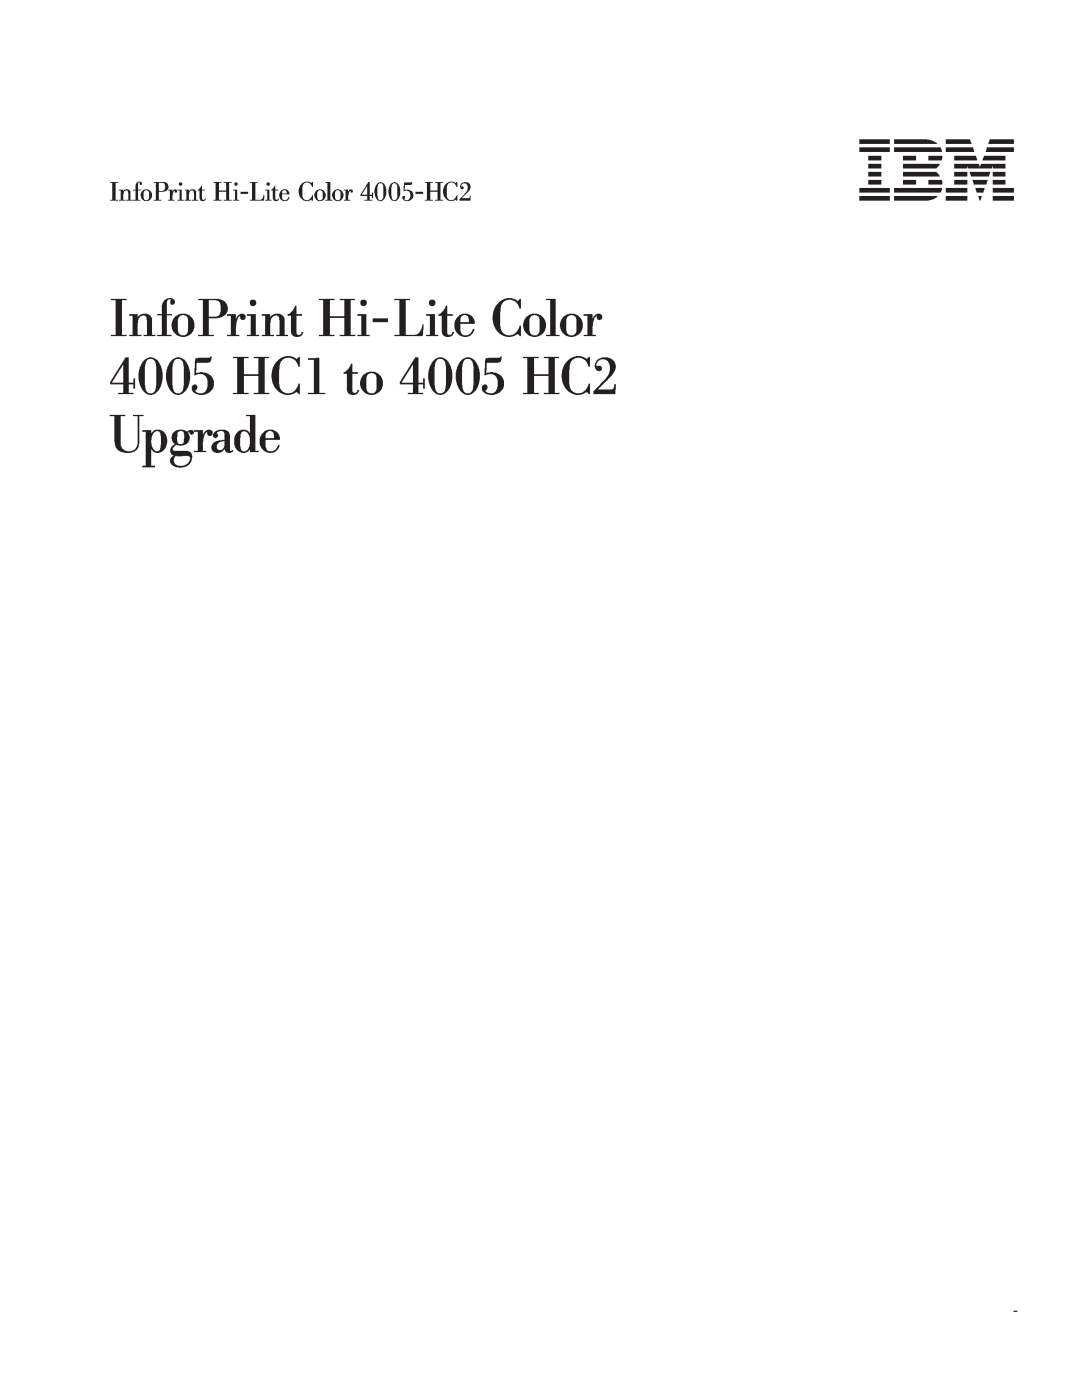 IBM manual InfoPrint Hi-Lite Color 4005 HC1 to 4005 HC2 Upgrade, InfoPrint Hi-Lite Color 4005-HC2 